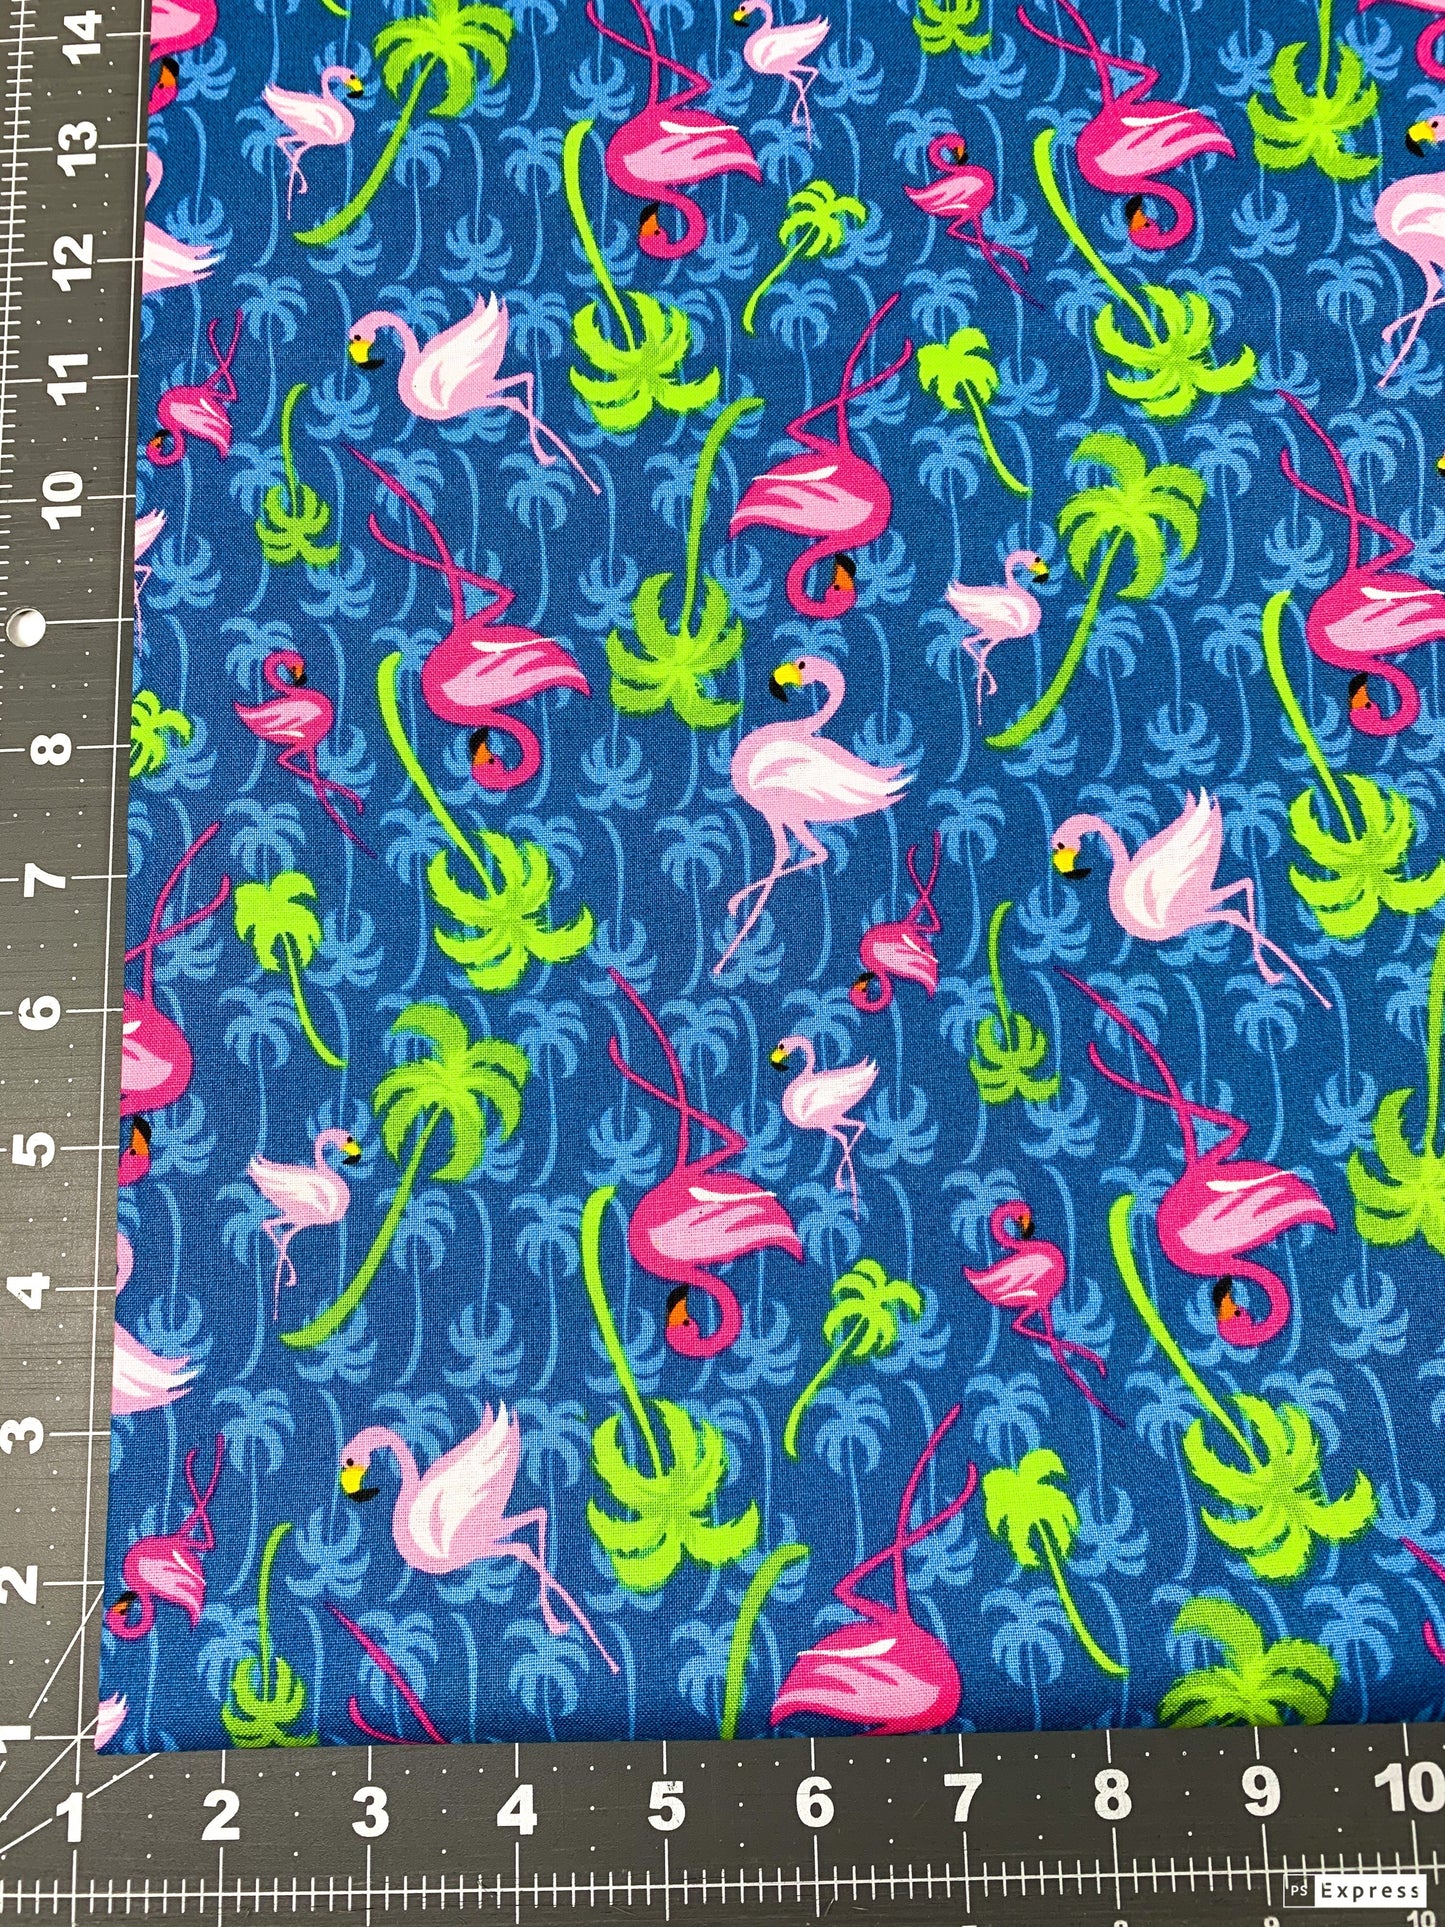 Pink Flamingo fabric 24489 Palm Tree fabric